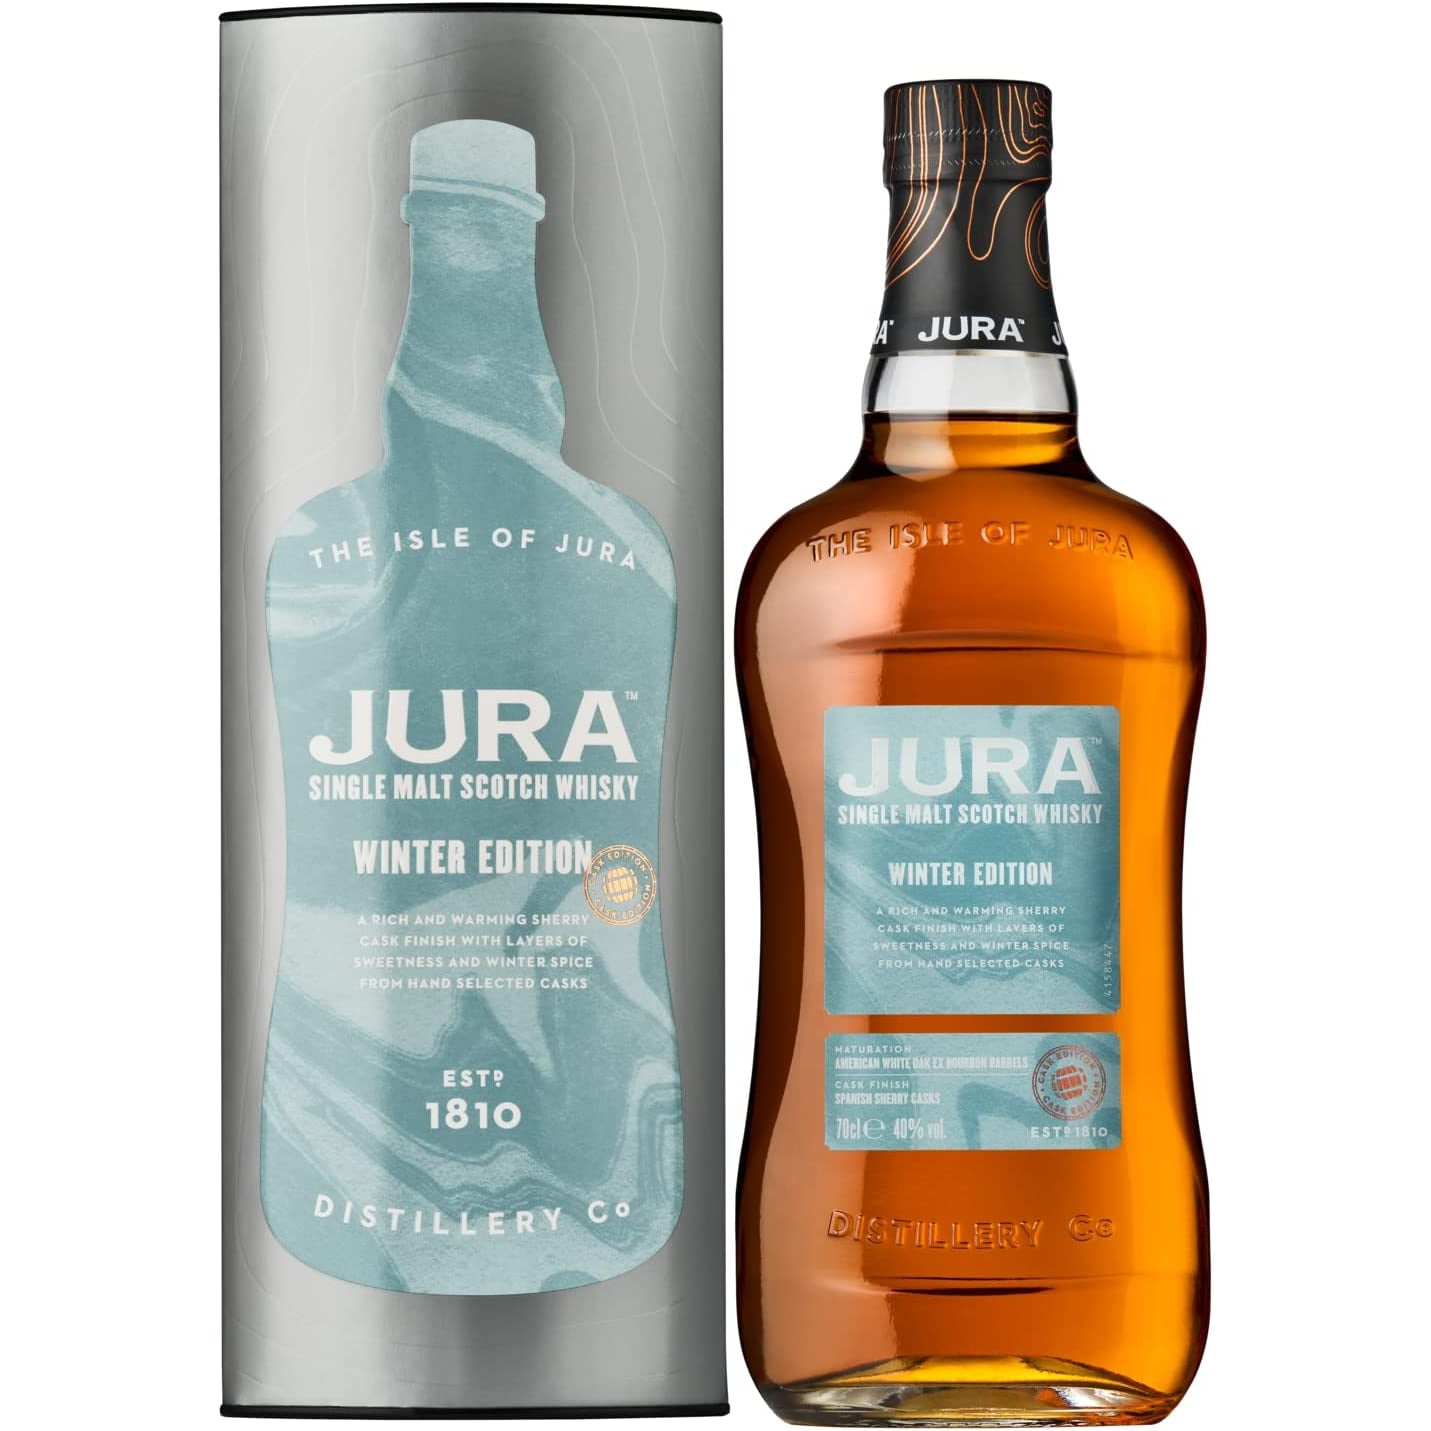 Whisky Jura The Sound